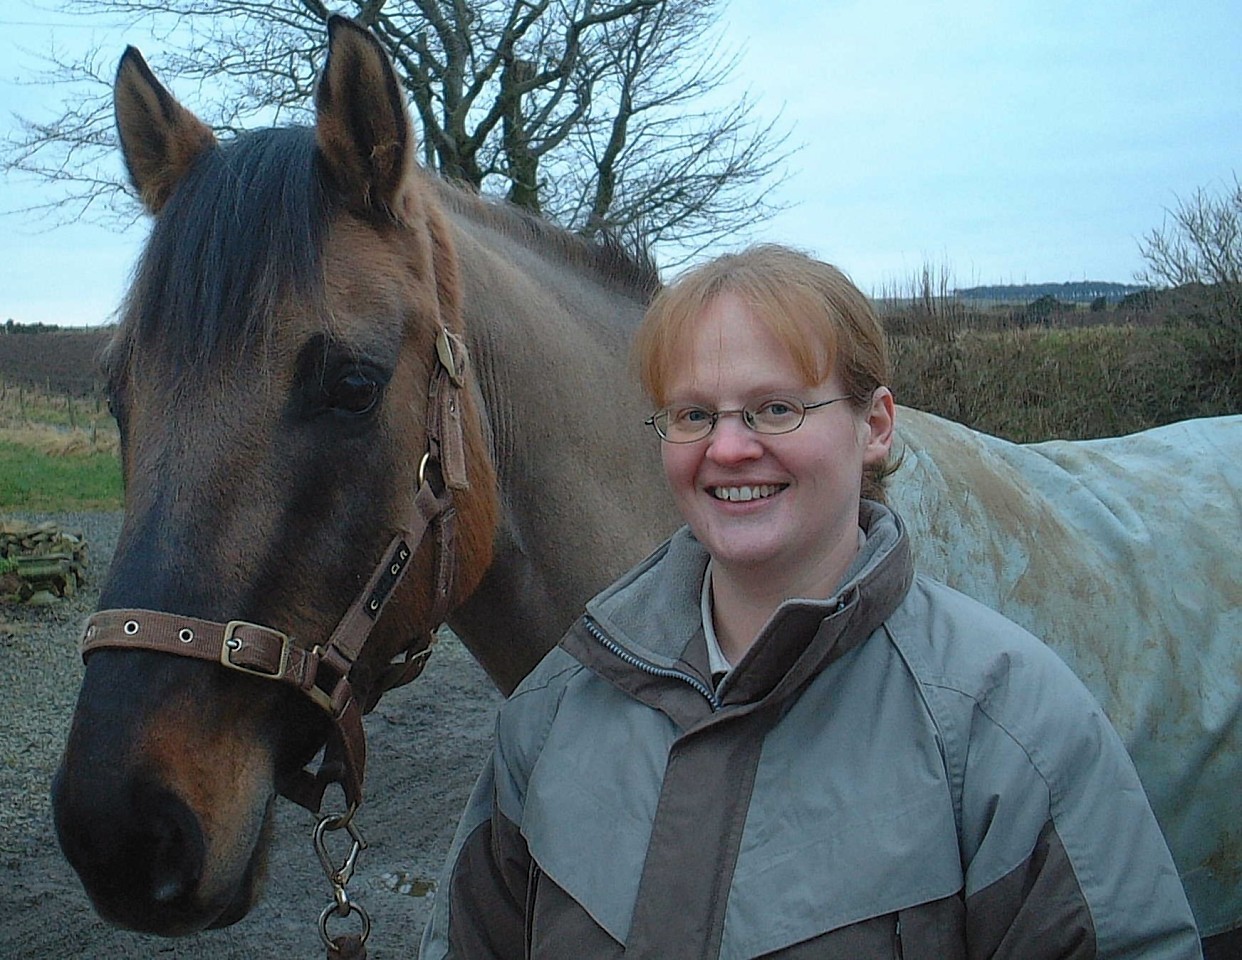 Harbro equine nutritionst Vicki Glasgow